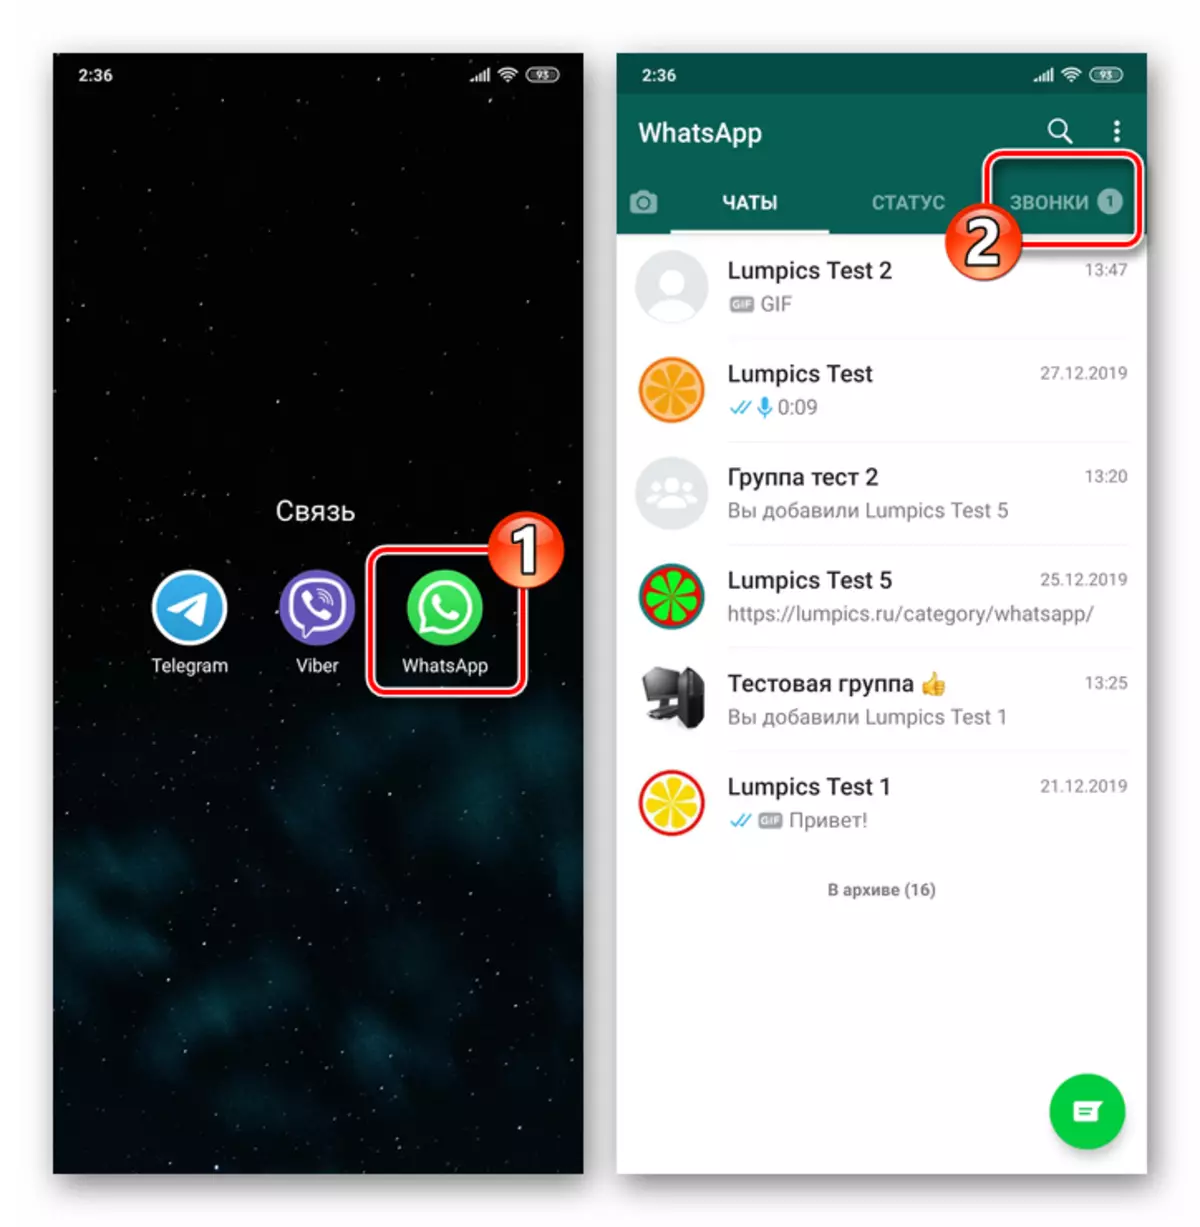 Android માટે Whatsapp મેસેન્જર ચલાવી રહ્યું છે, એપ્લિકેશનમાં કૉલ્સ ટેબ પર જાઓ